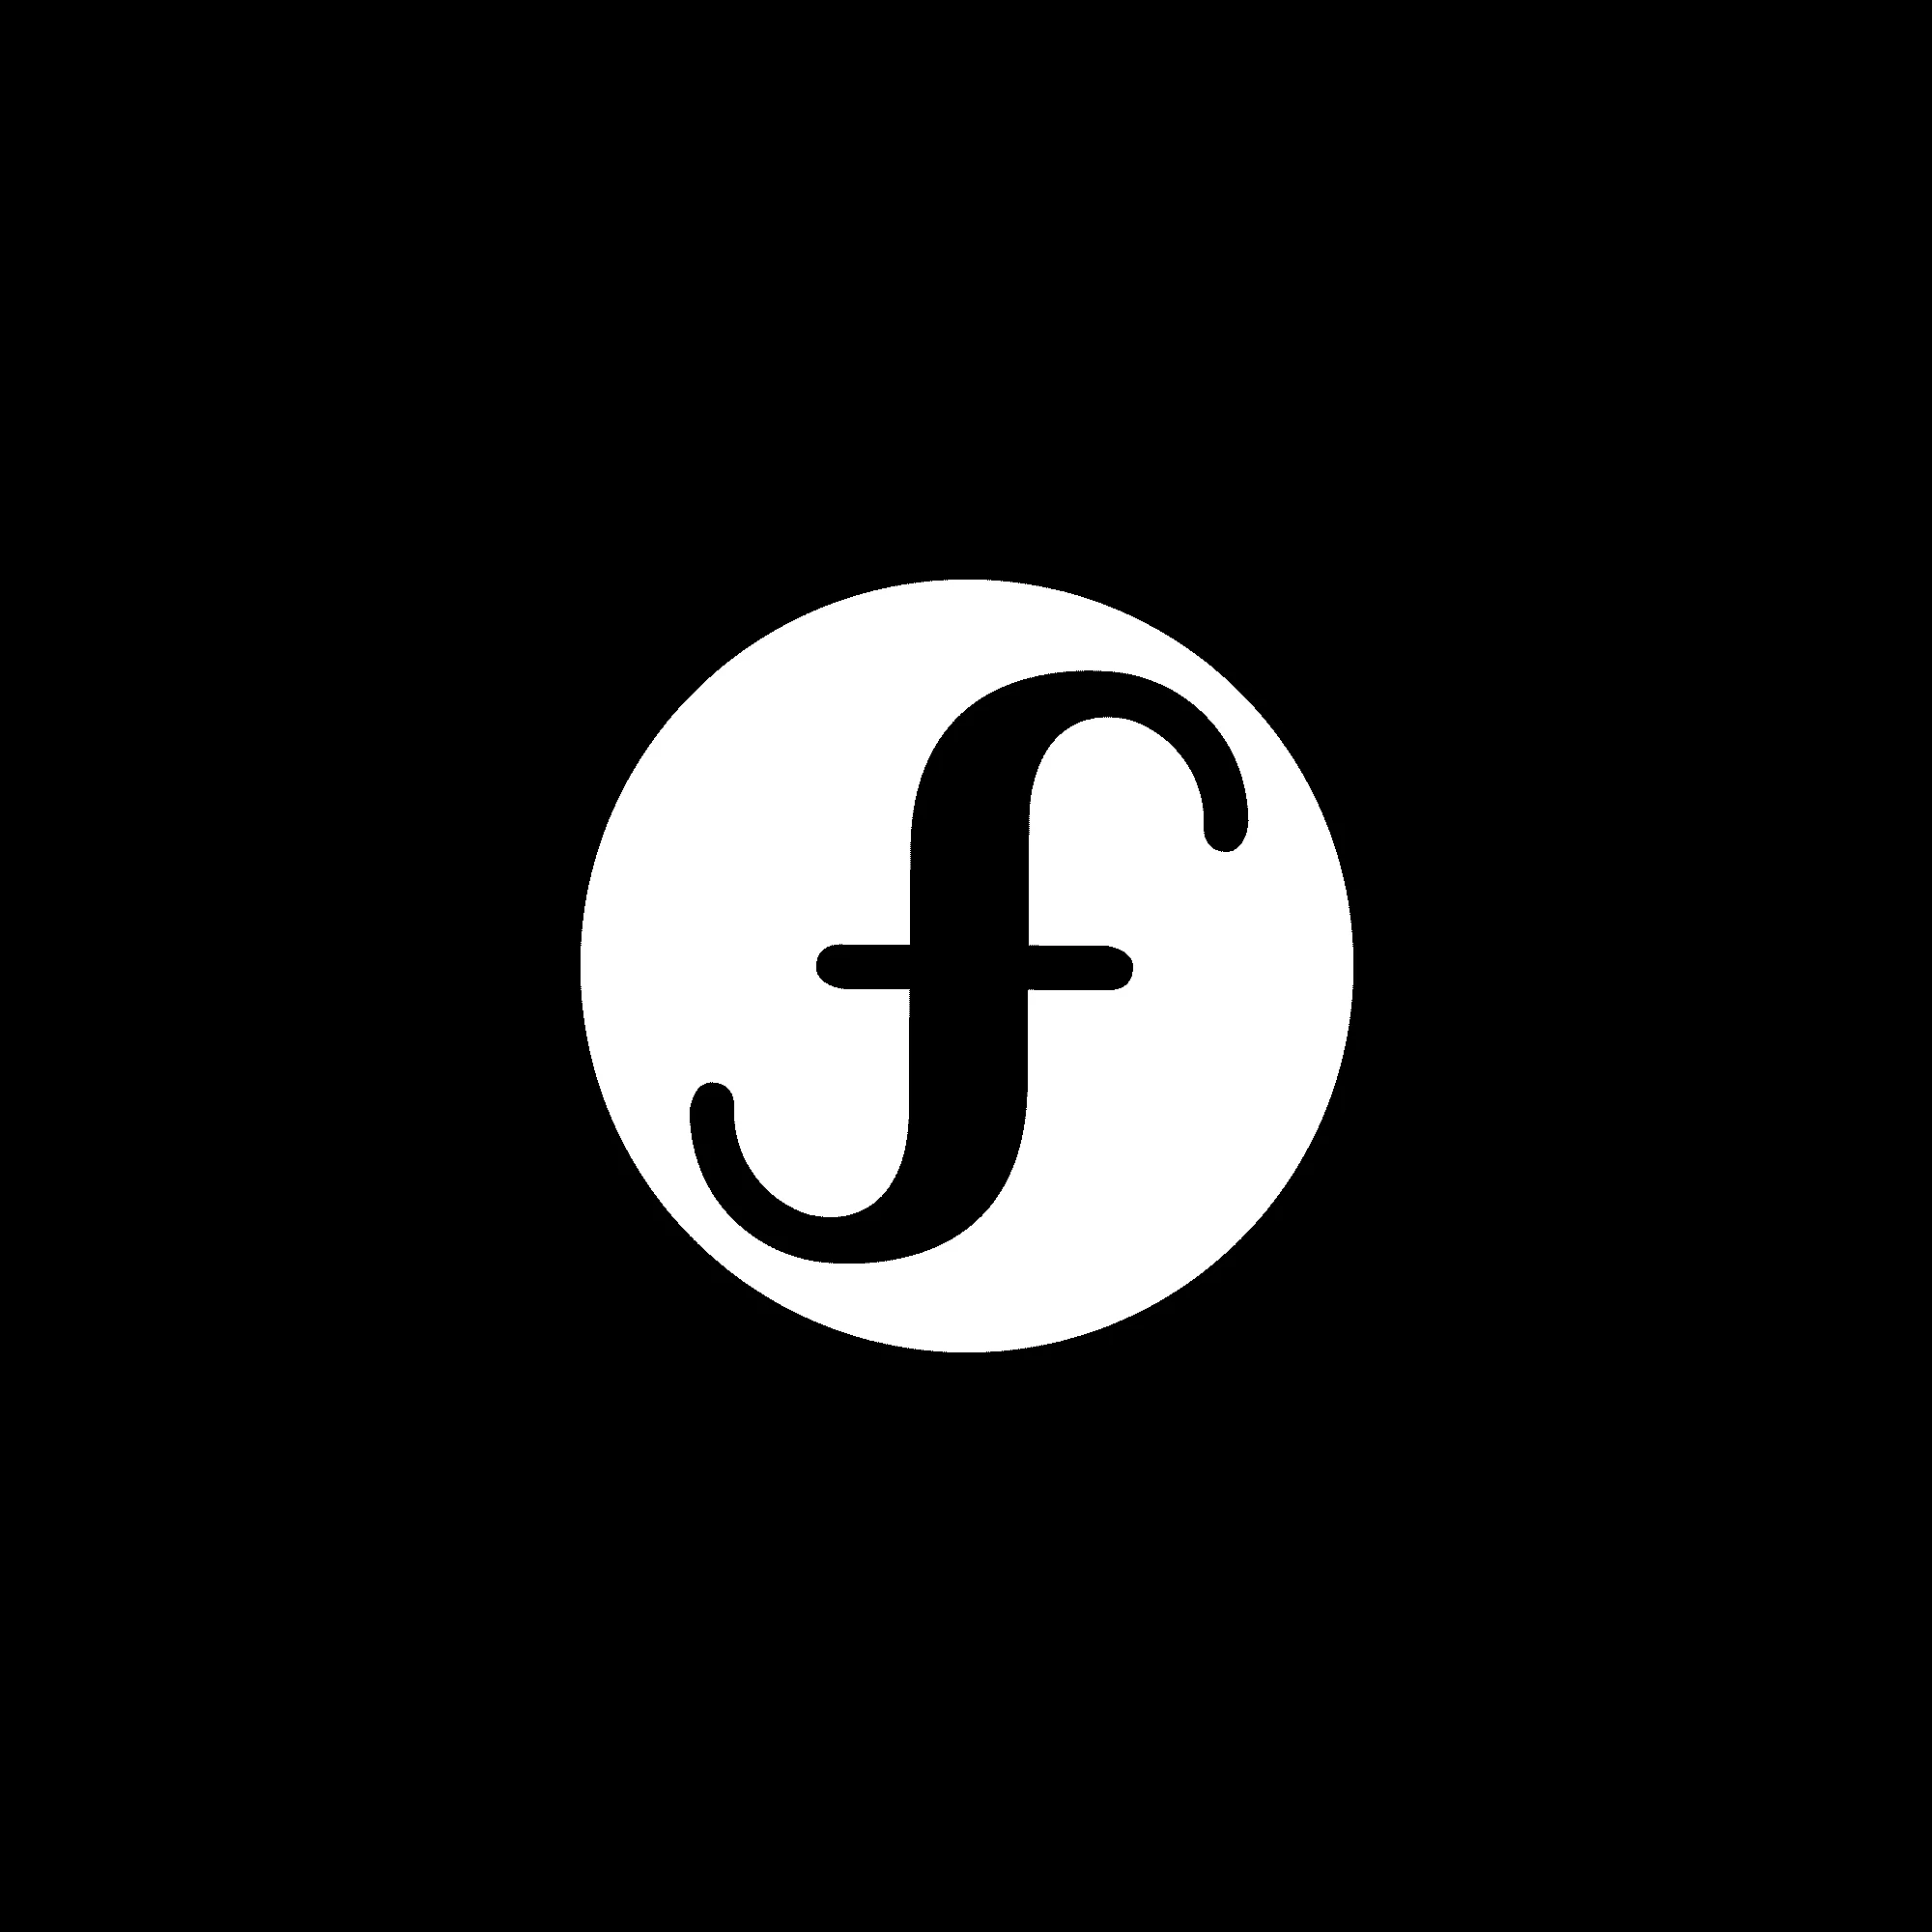 Branding logo design circle with minimalist letter